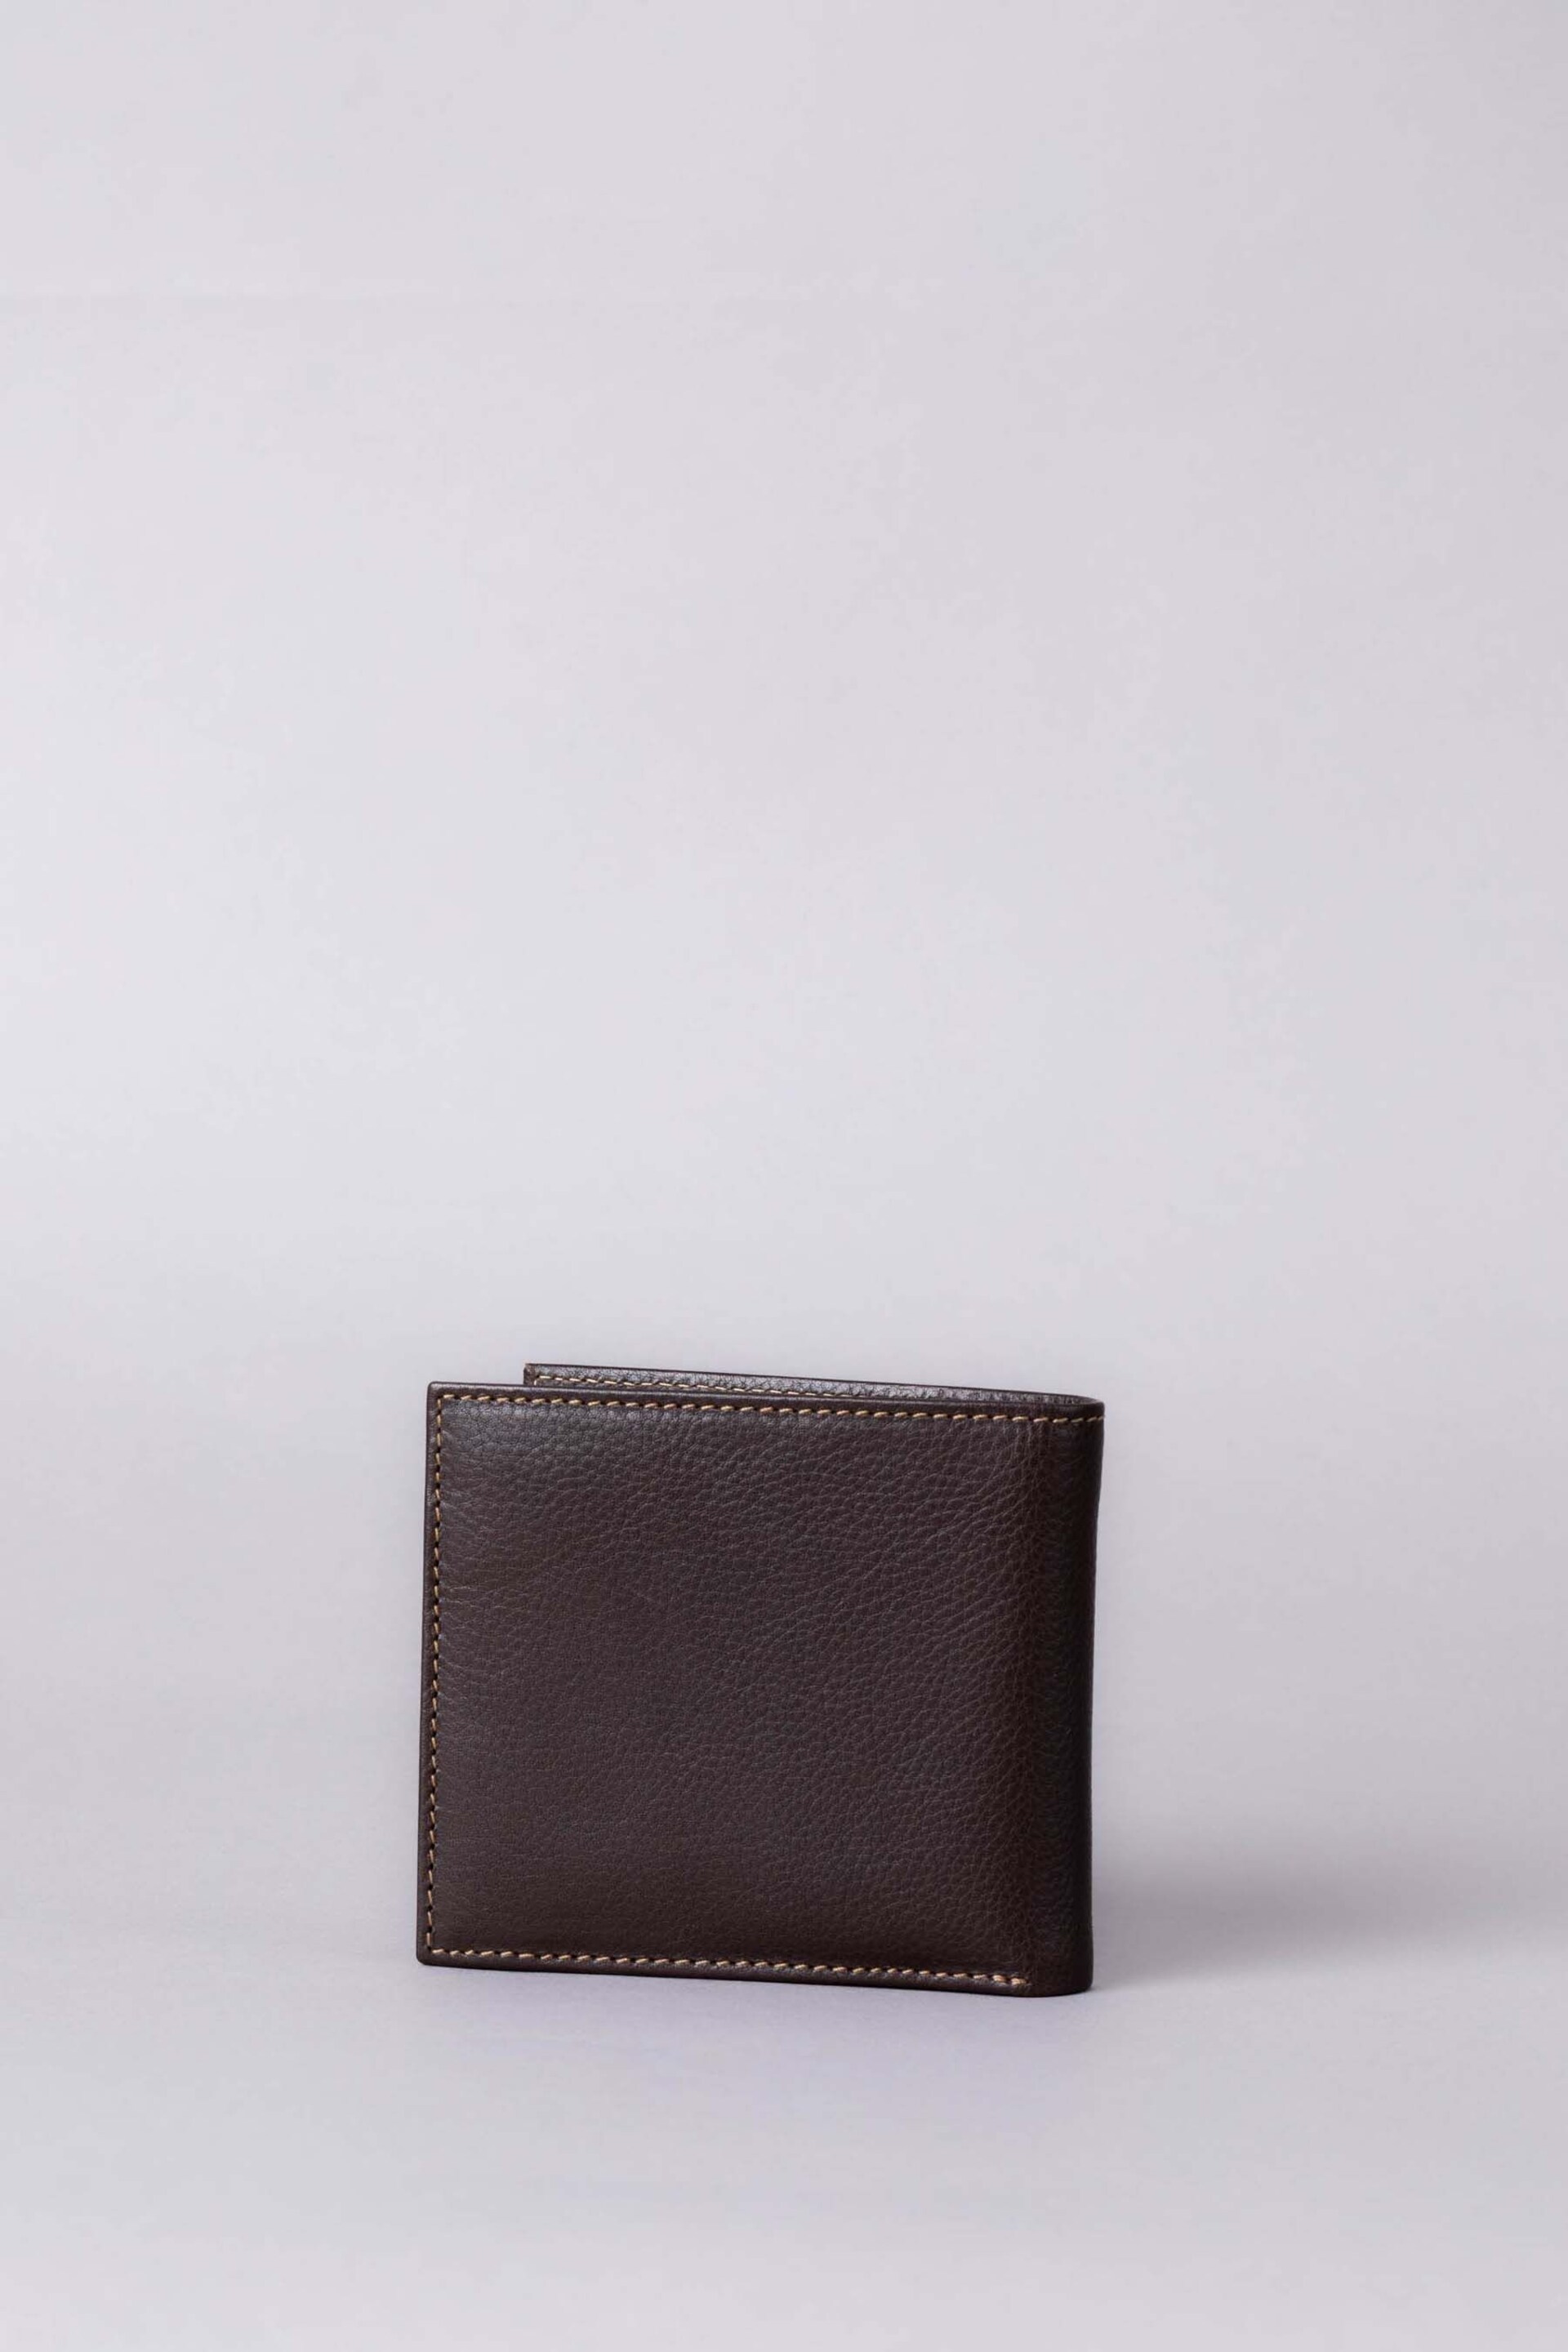 Lakeland Leather Brown Kelsick Leather Wallet - Image 3 of 7